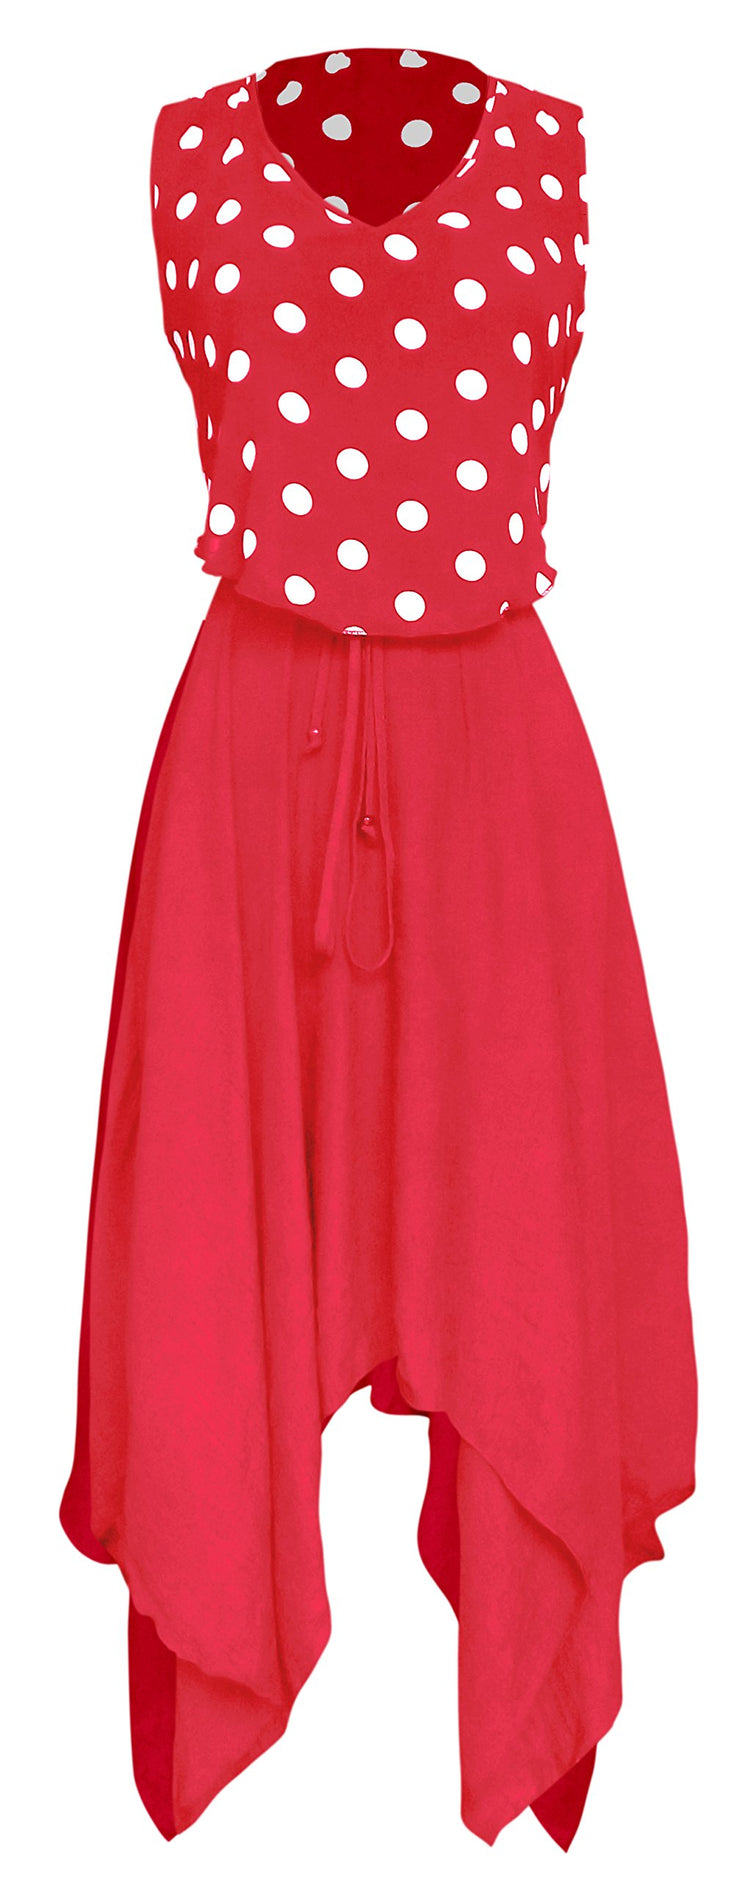 Women's Casual 2 in 1 Polka Dot Flowing Handkerchief Dress (Coral, Medium)